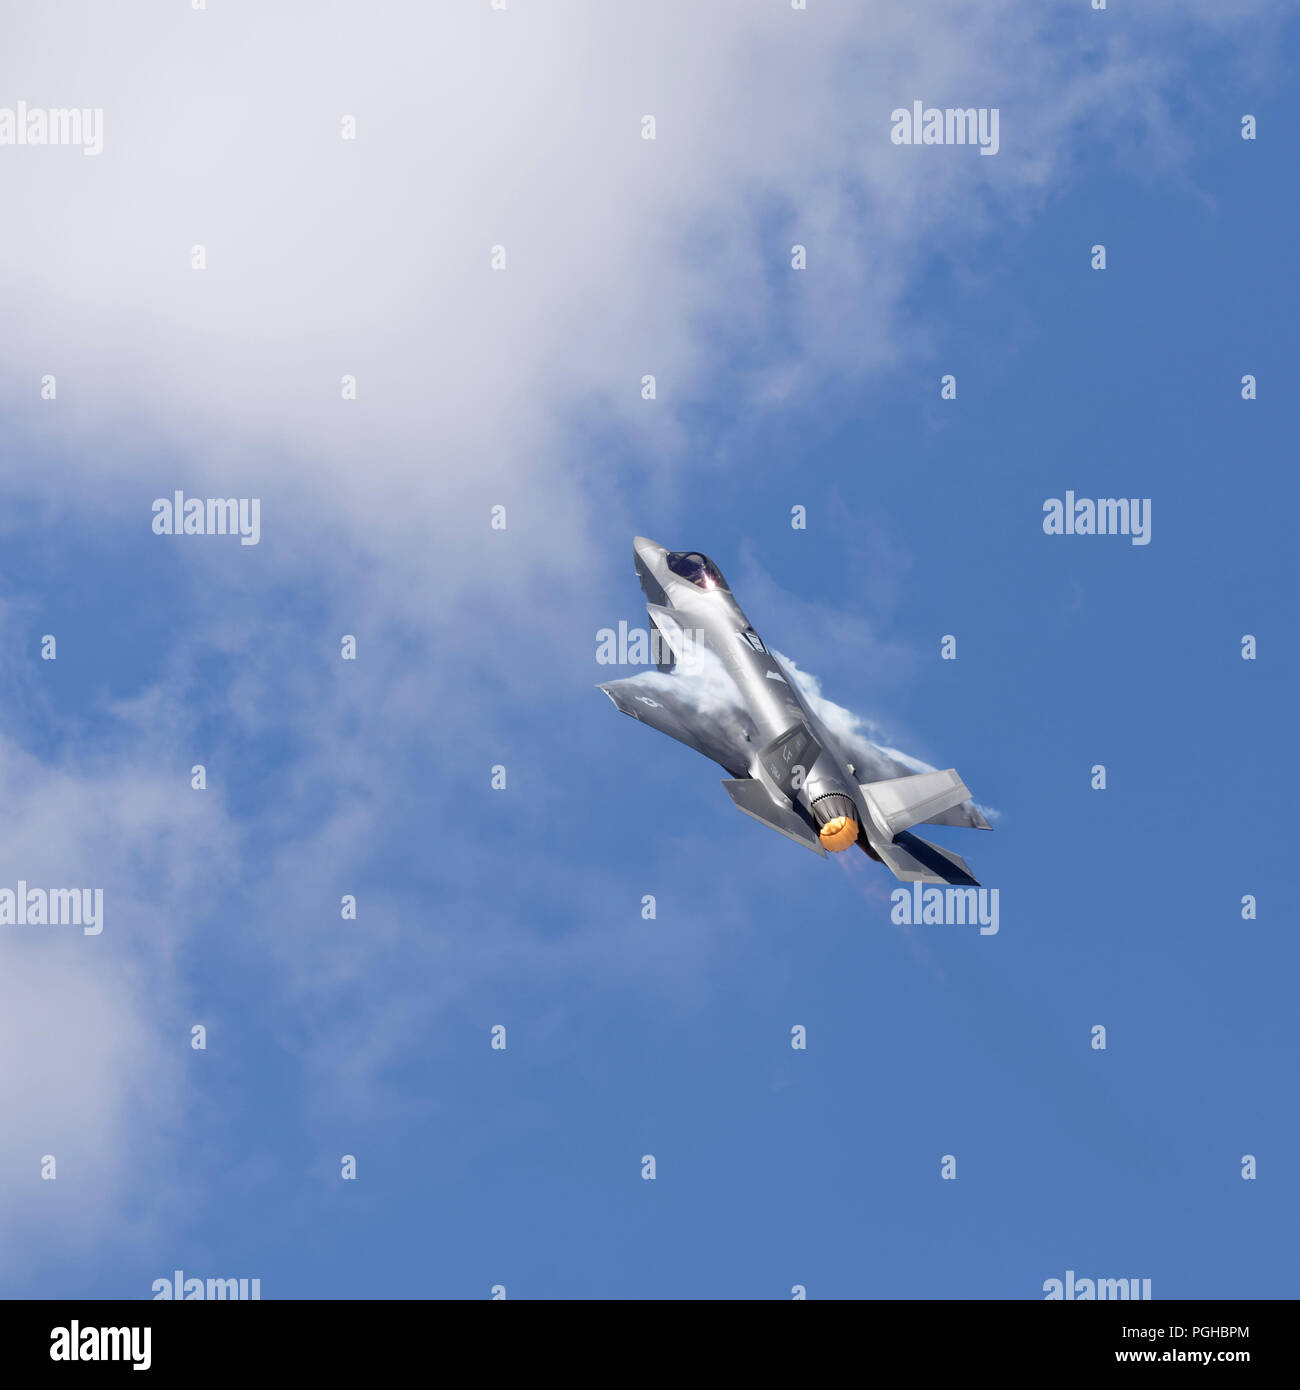 Gli Stati Uniti Airforce Lockheed Martin F-35A Stealth Fighter Jet mette su un display immpressive durante il Royal International Air Tattoo Foto Stock